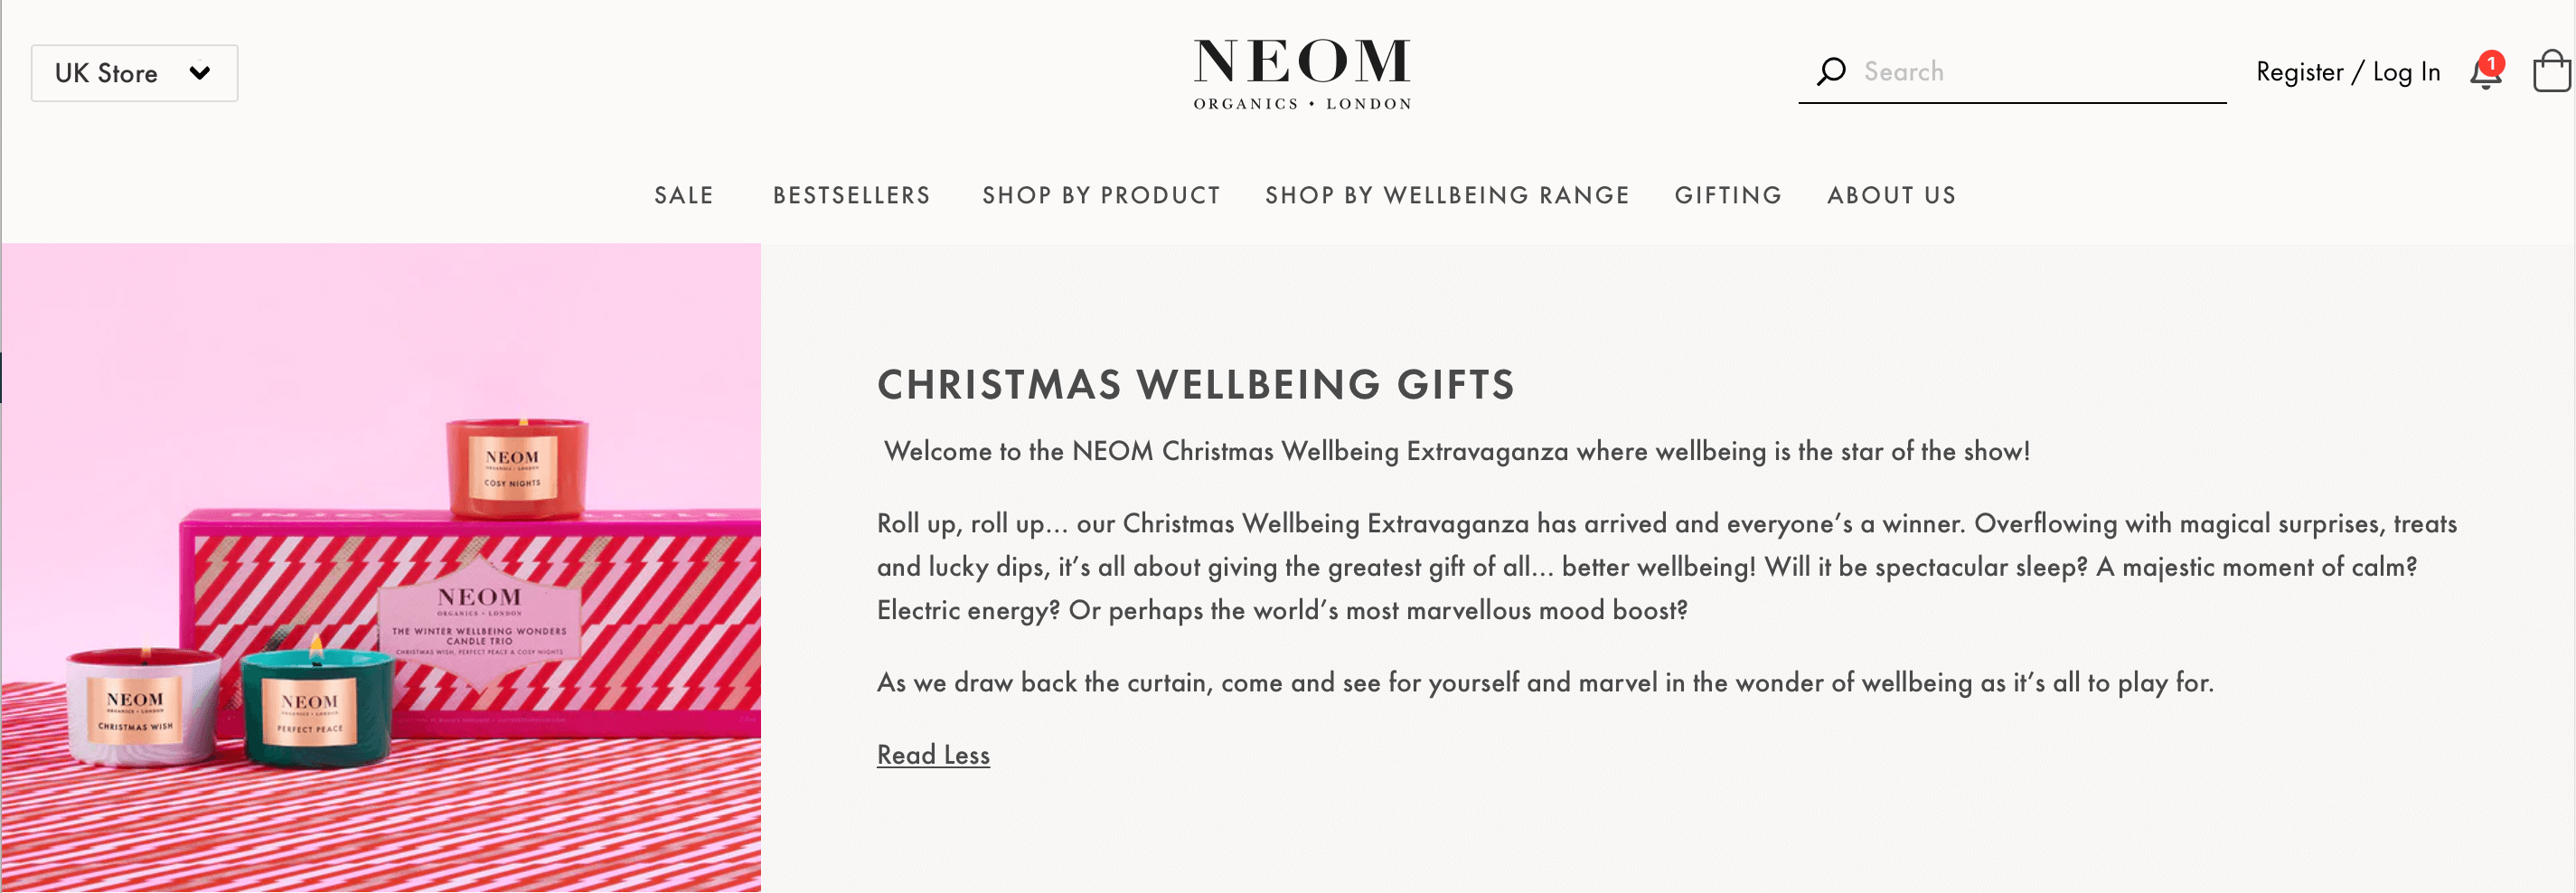 NEOM Website Blurb